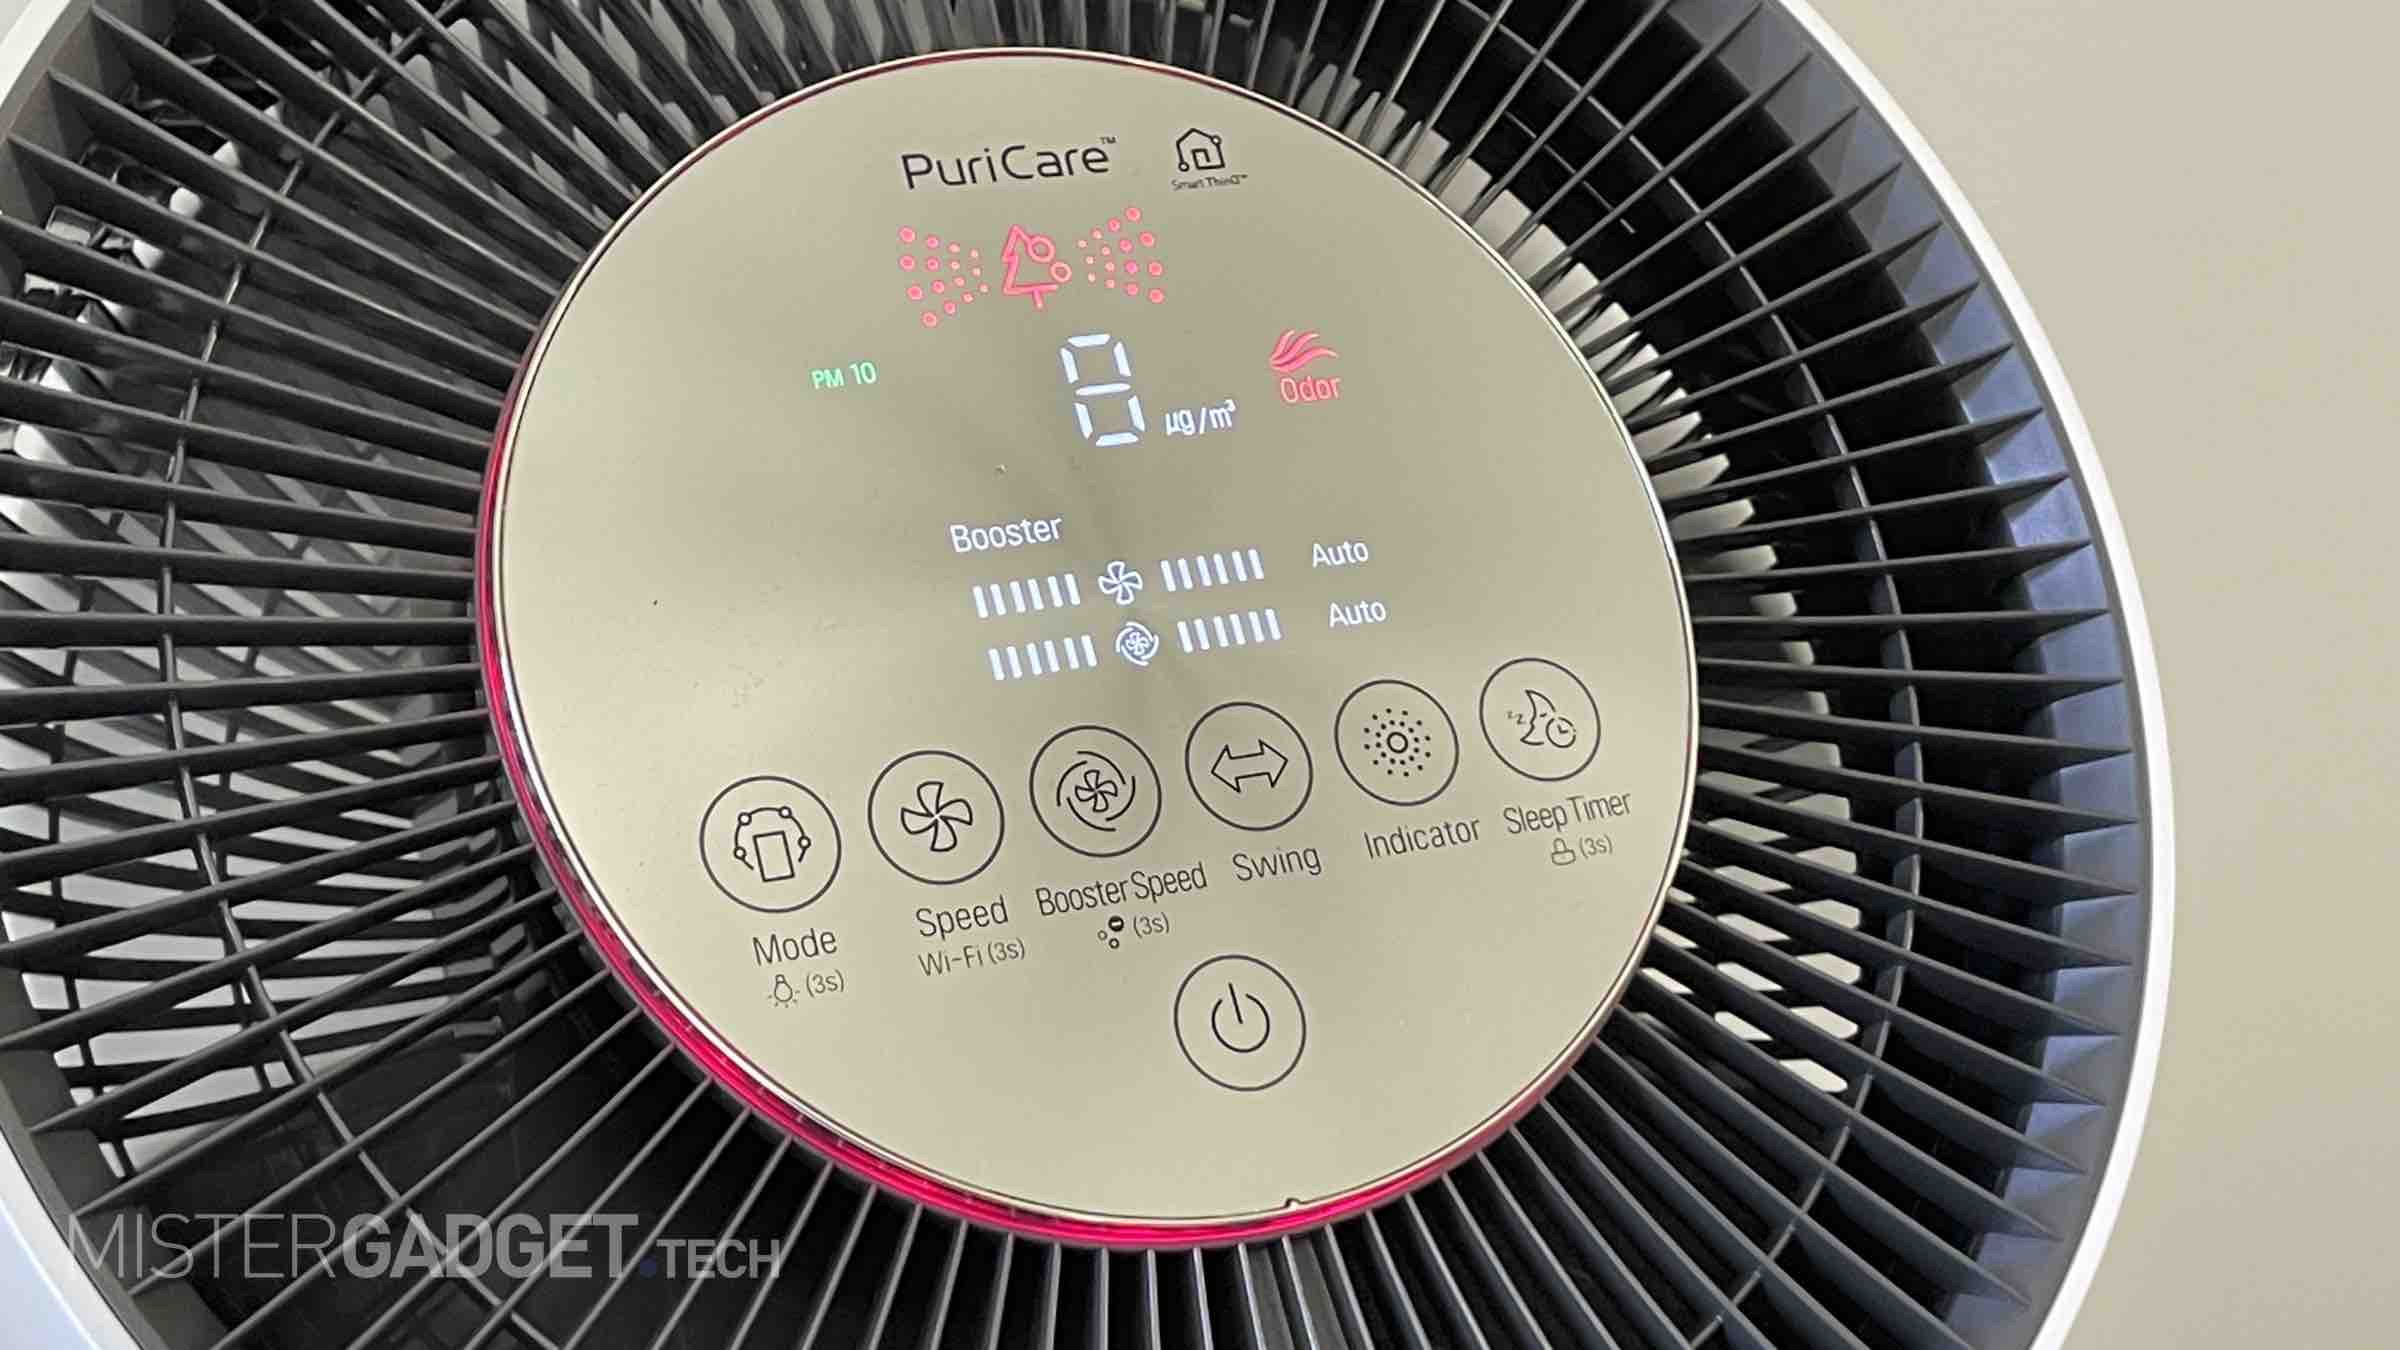 Recensione LG Puricare 360 Air-mistergadget-tech